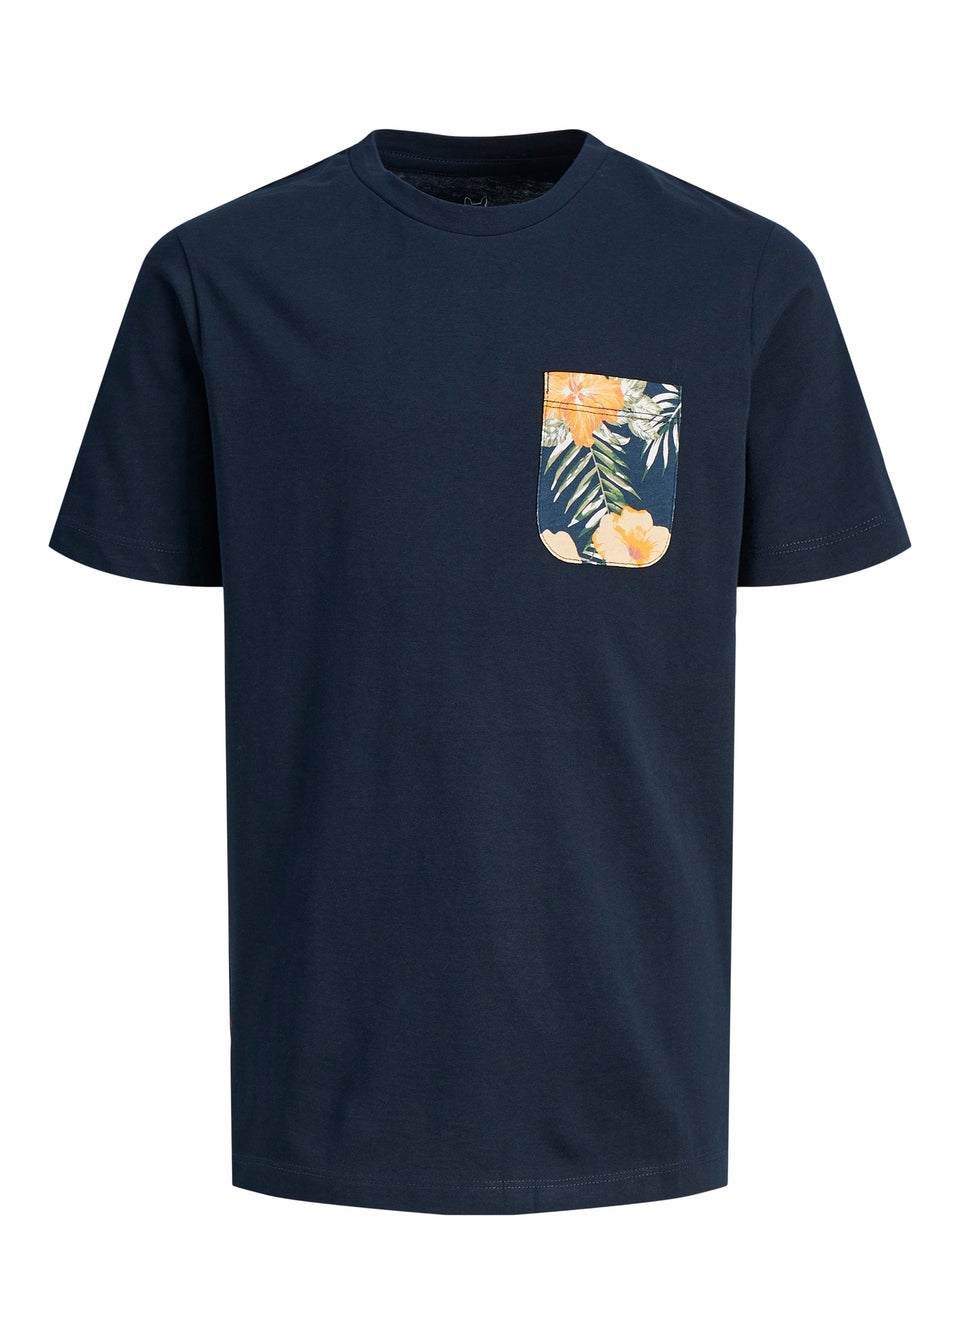 Jack and Jones Boys Navy Chill Pocket T-Shirt ( 6-16yrs)